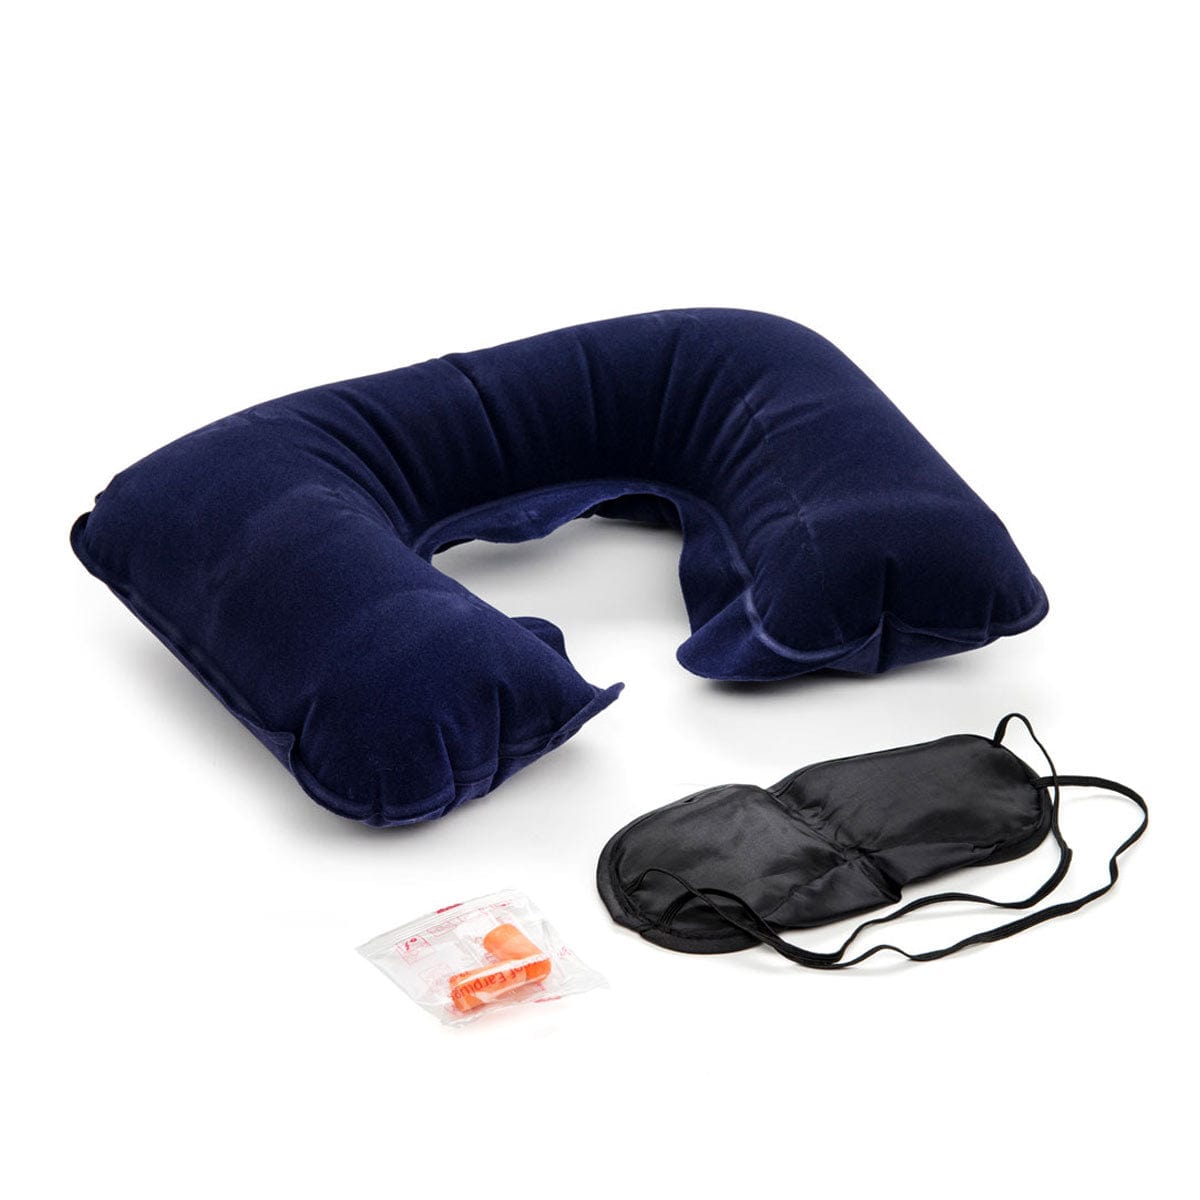 Relaxus Wholesale Comfort Travel Set Neck Pillow